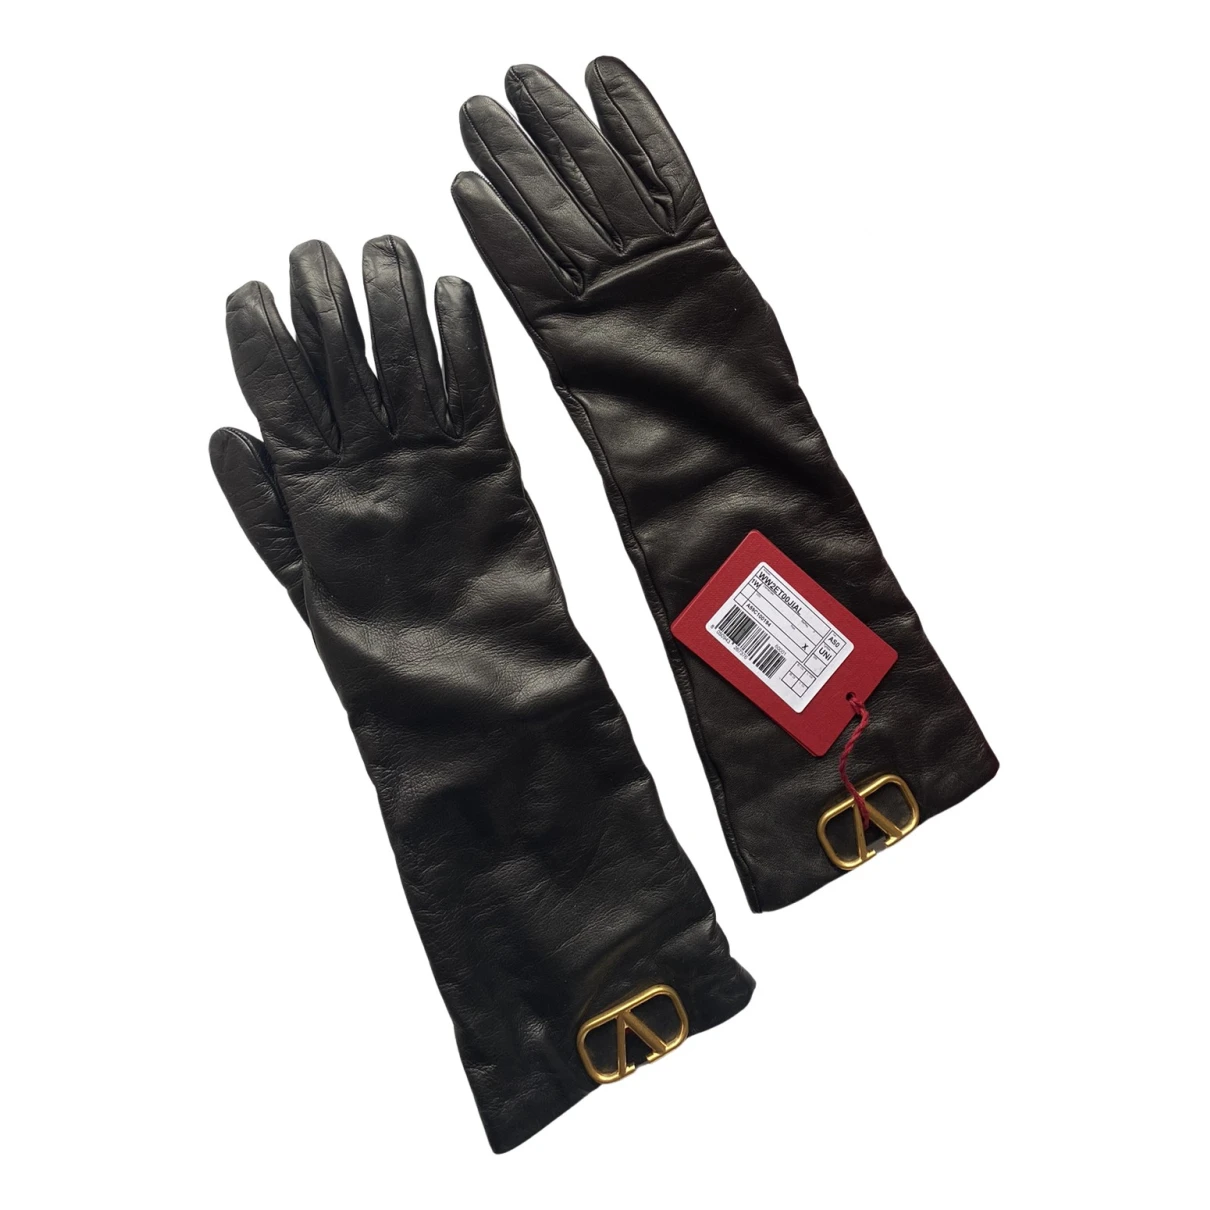 accessories Valentino Garavani gloves for Female Leather 7.5 Inches. Used condition